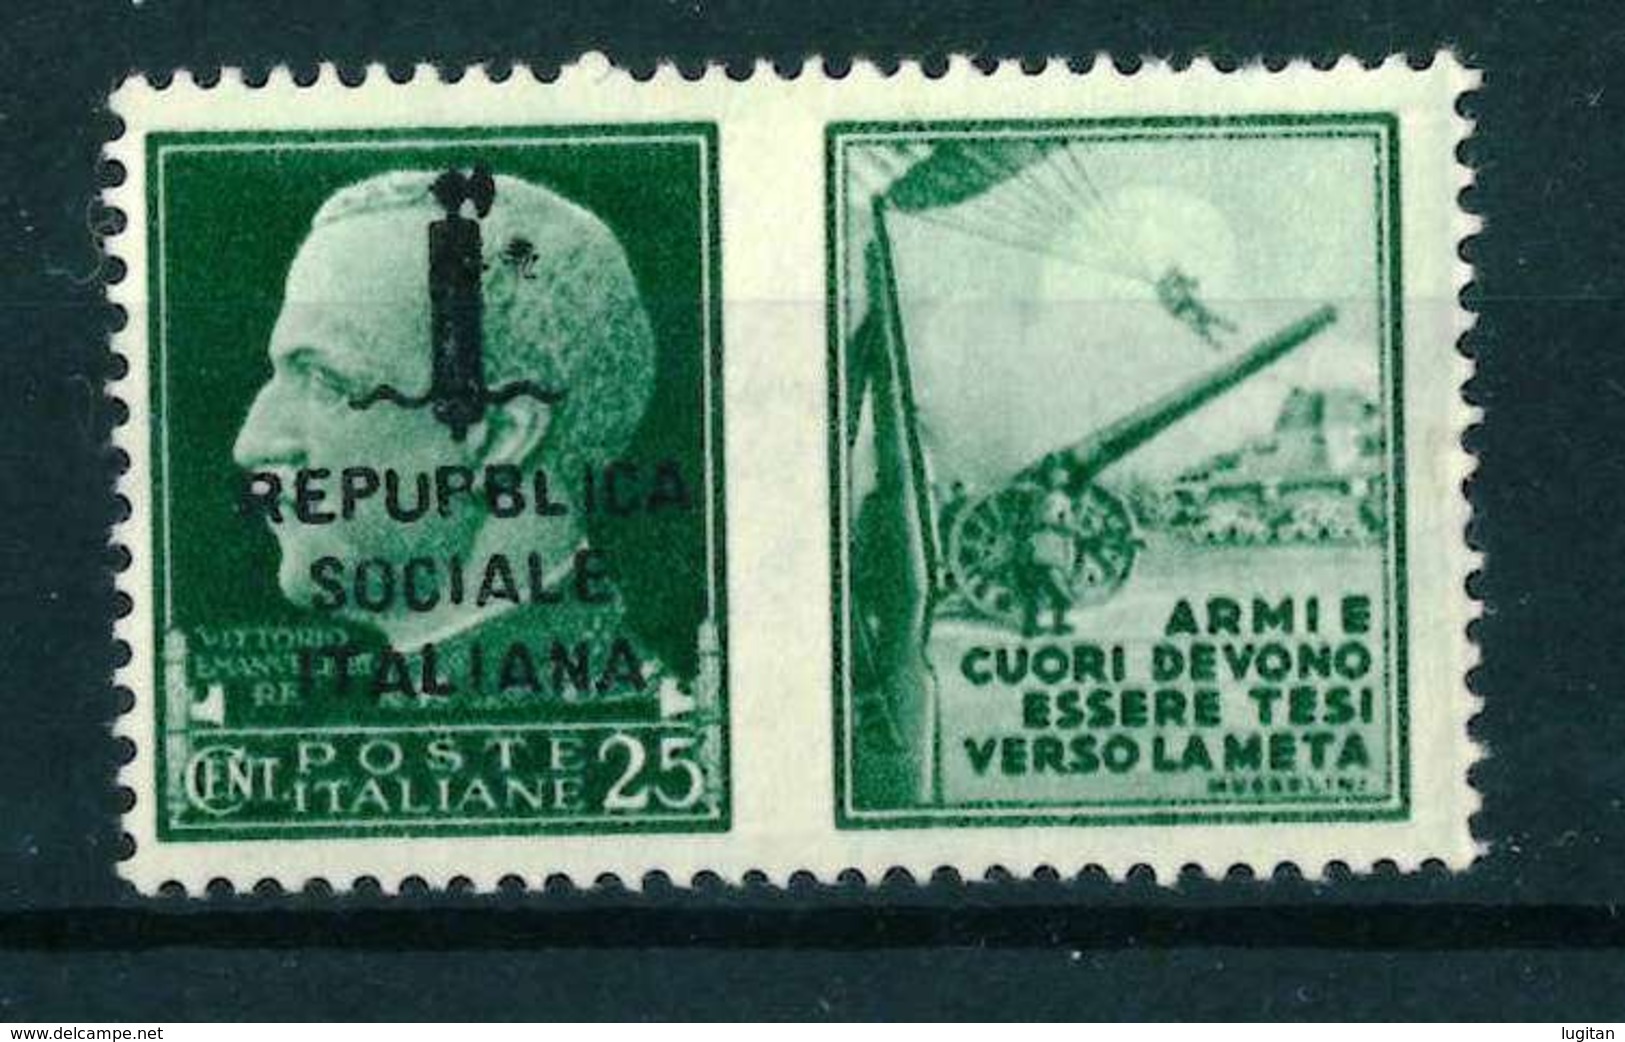 VARIETA' - REPUBPLICA ITALIANA SASS. 26 H - NUOVO MNH**  - PROPAGANDA DI GUERRA - Kriegspropaganda